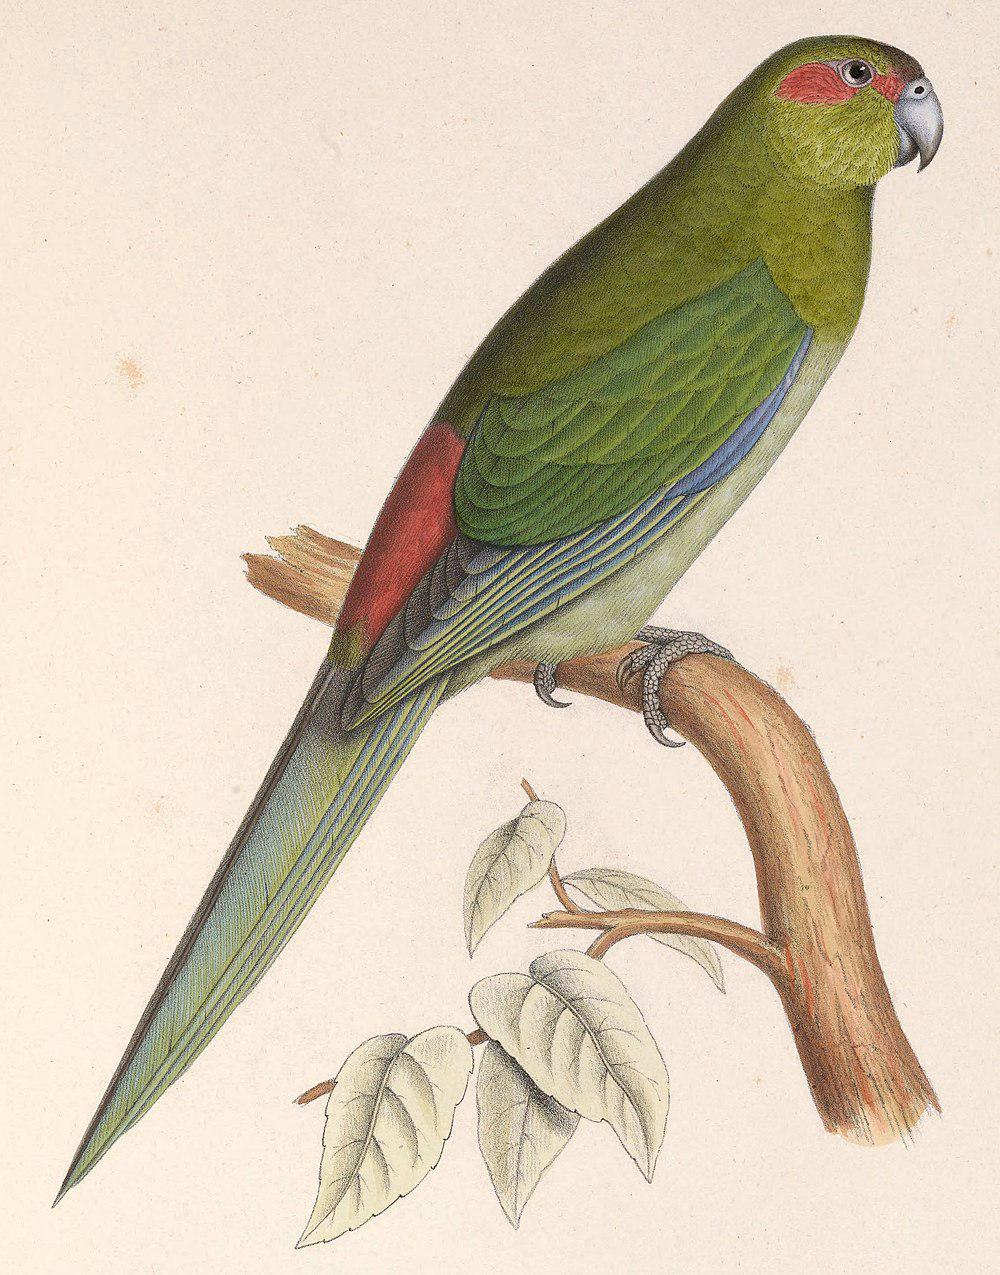 黑额鹦鹉 / Black-fronted Parakeet / Cyanoramphus zealandicus